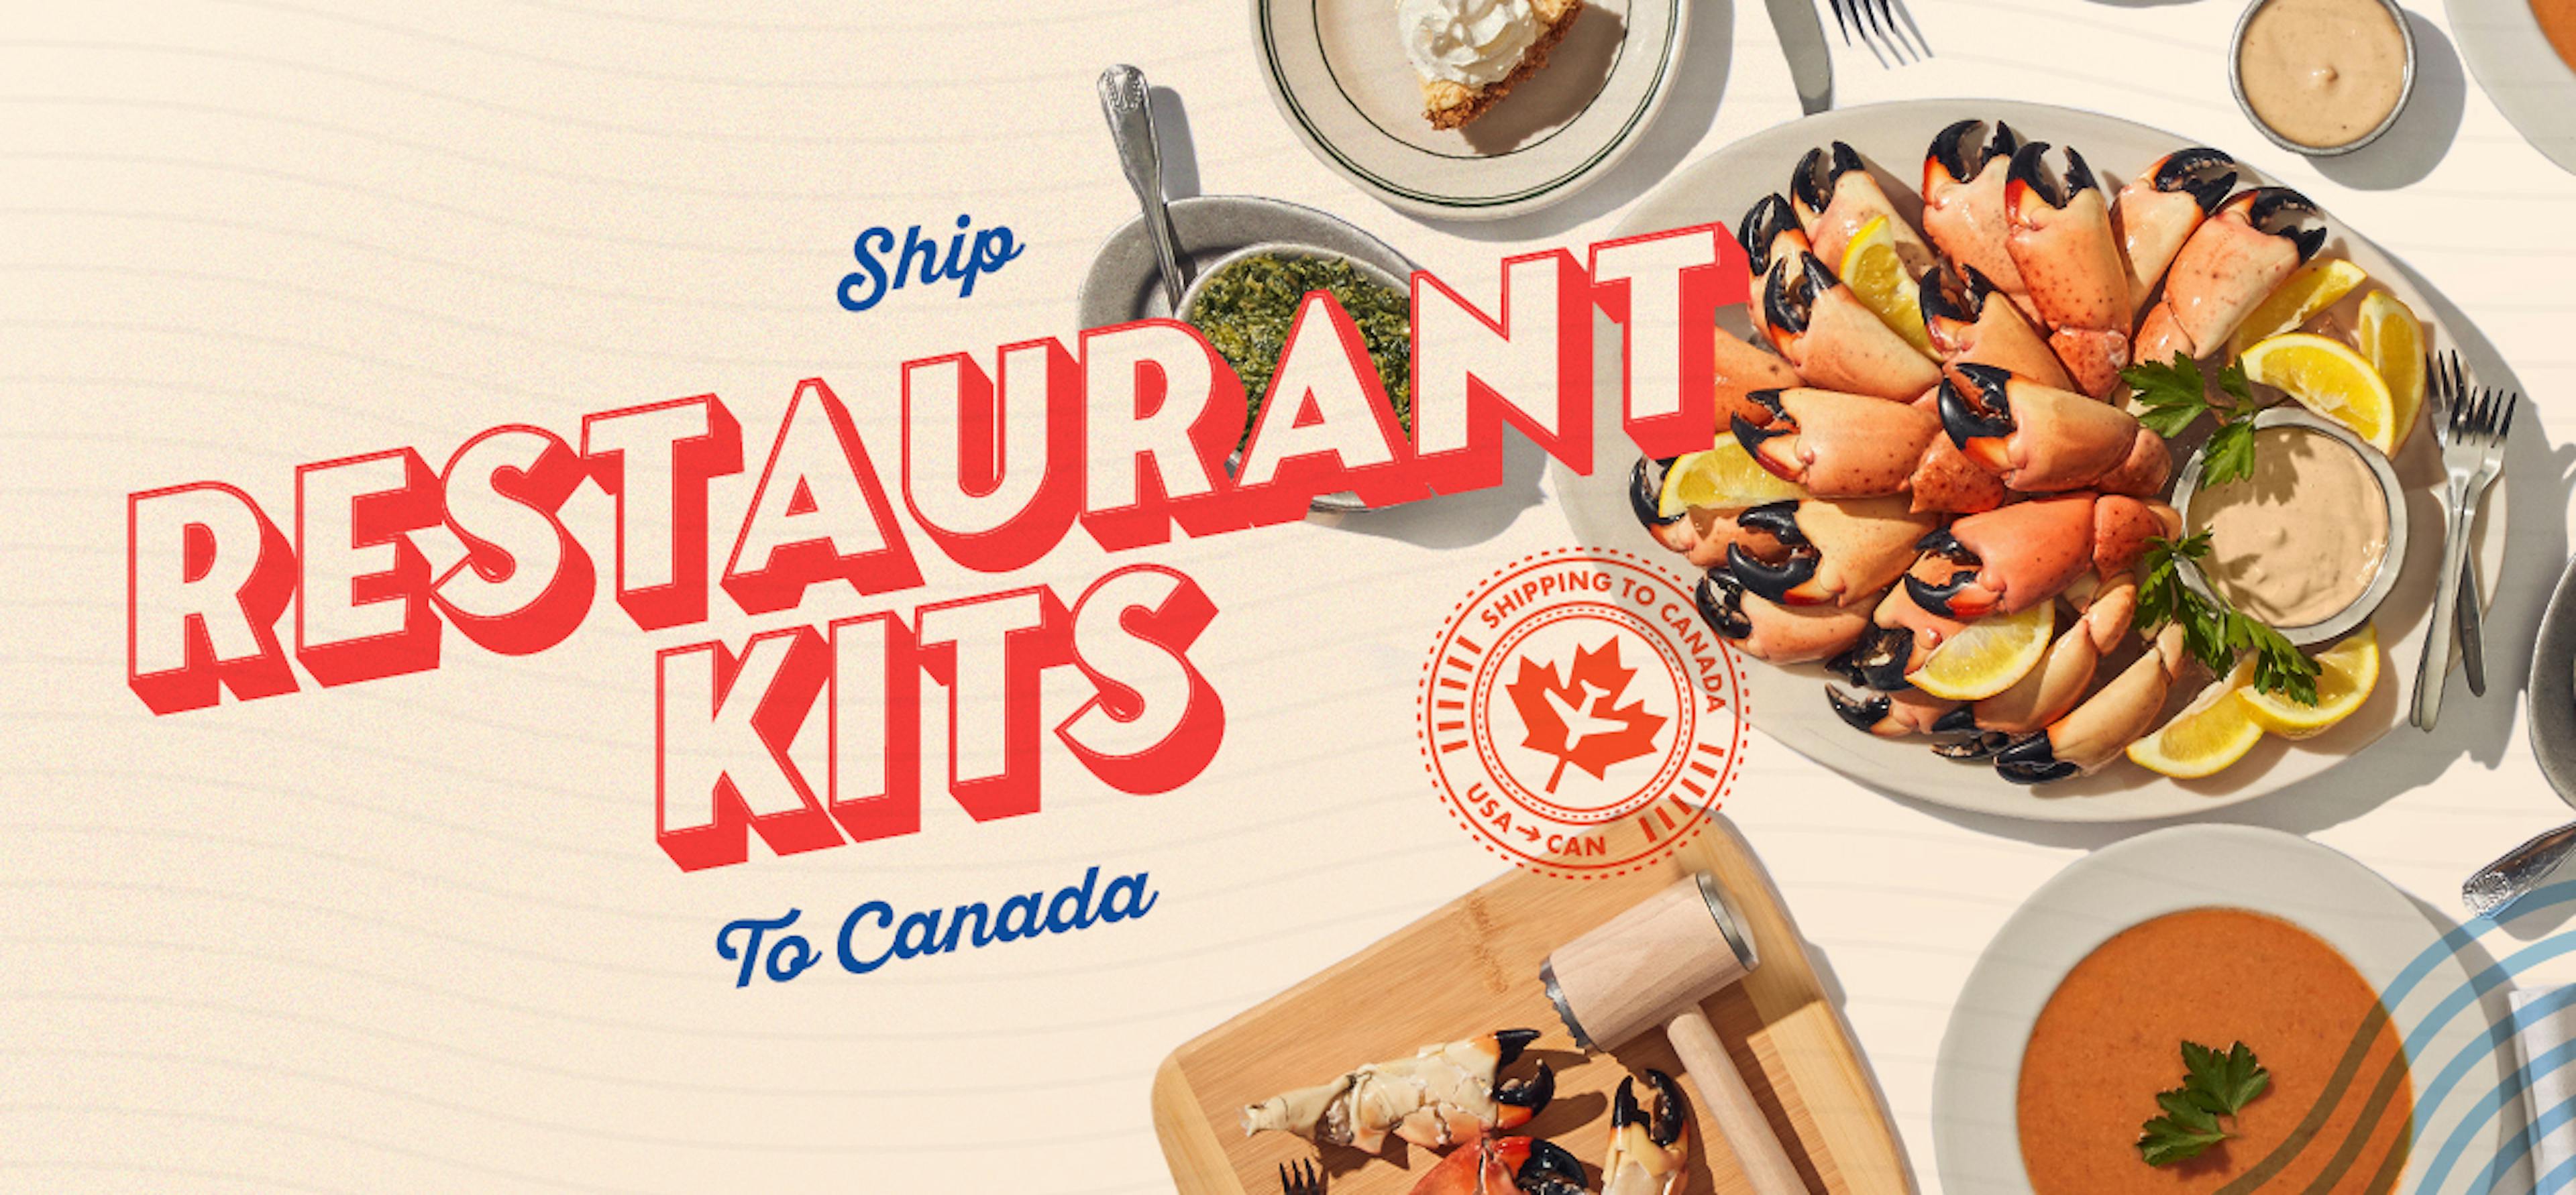 Restaurants Kits that Ship to Canada